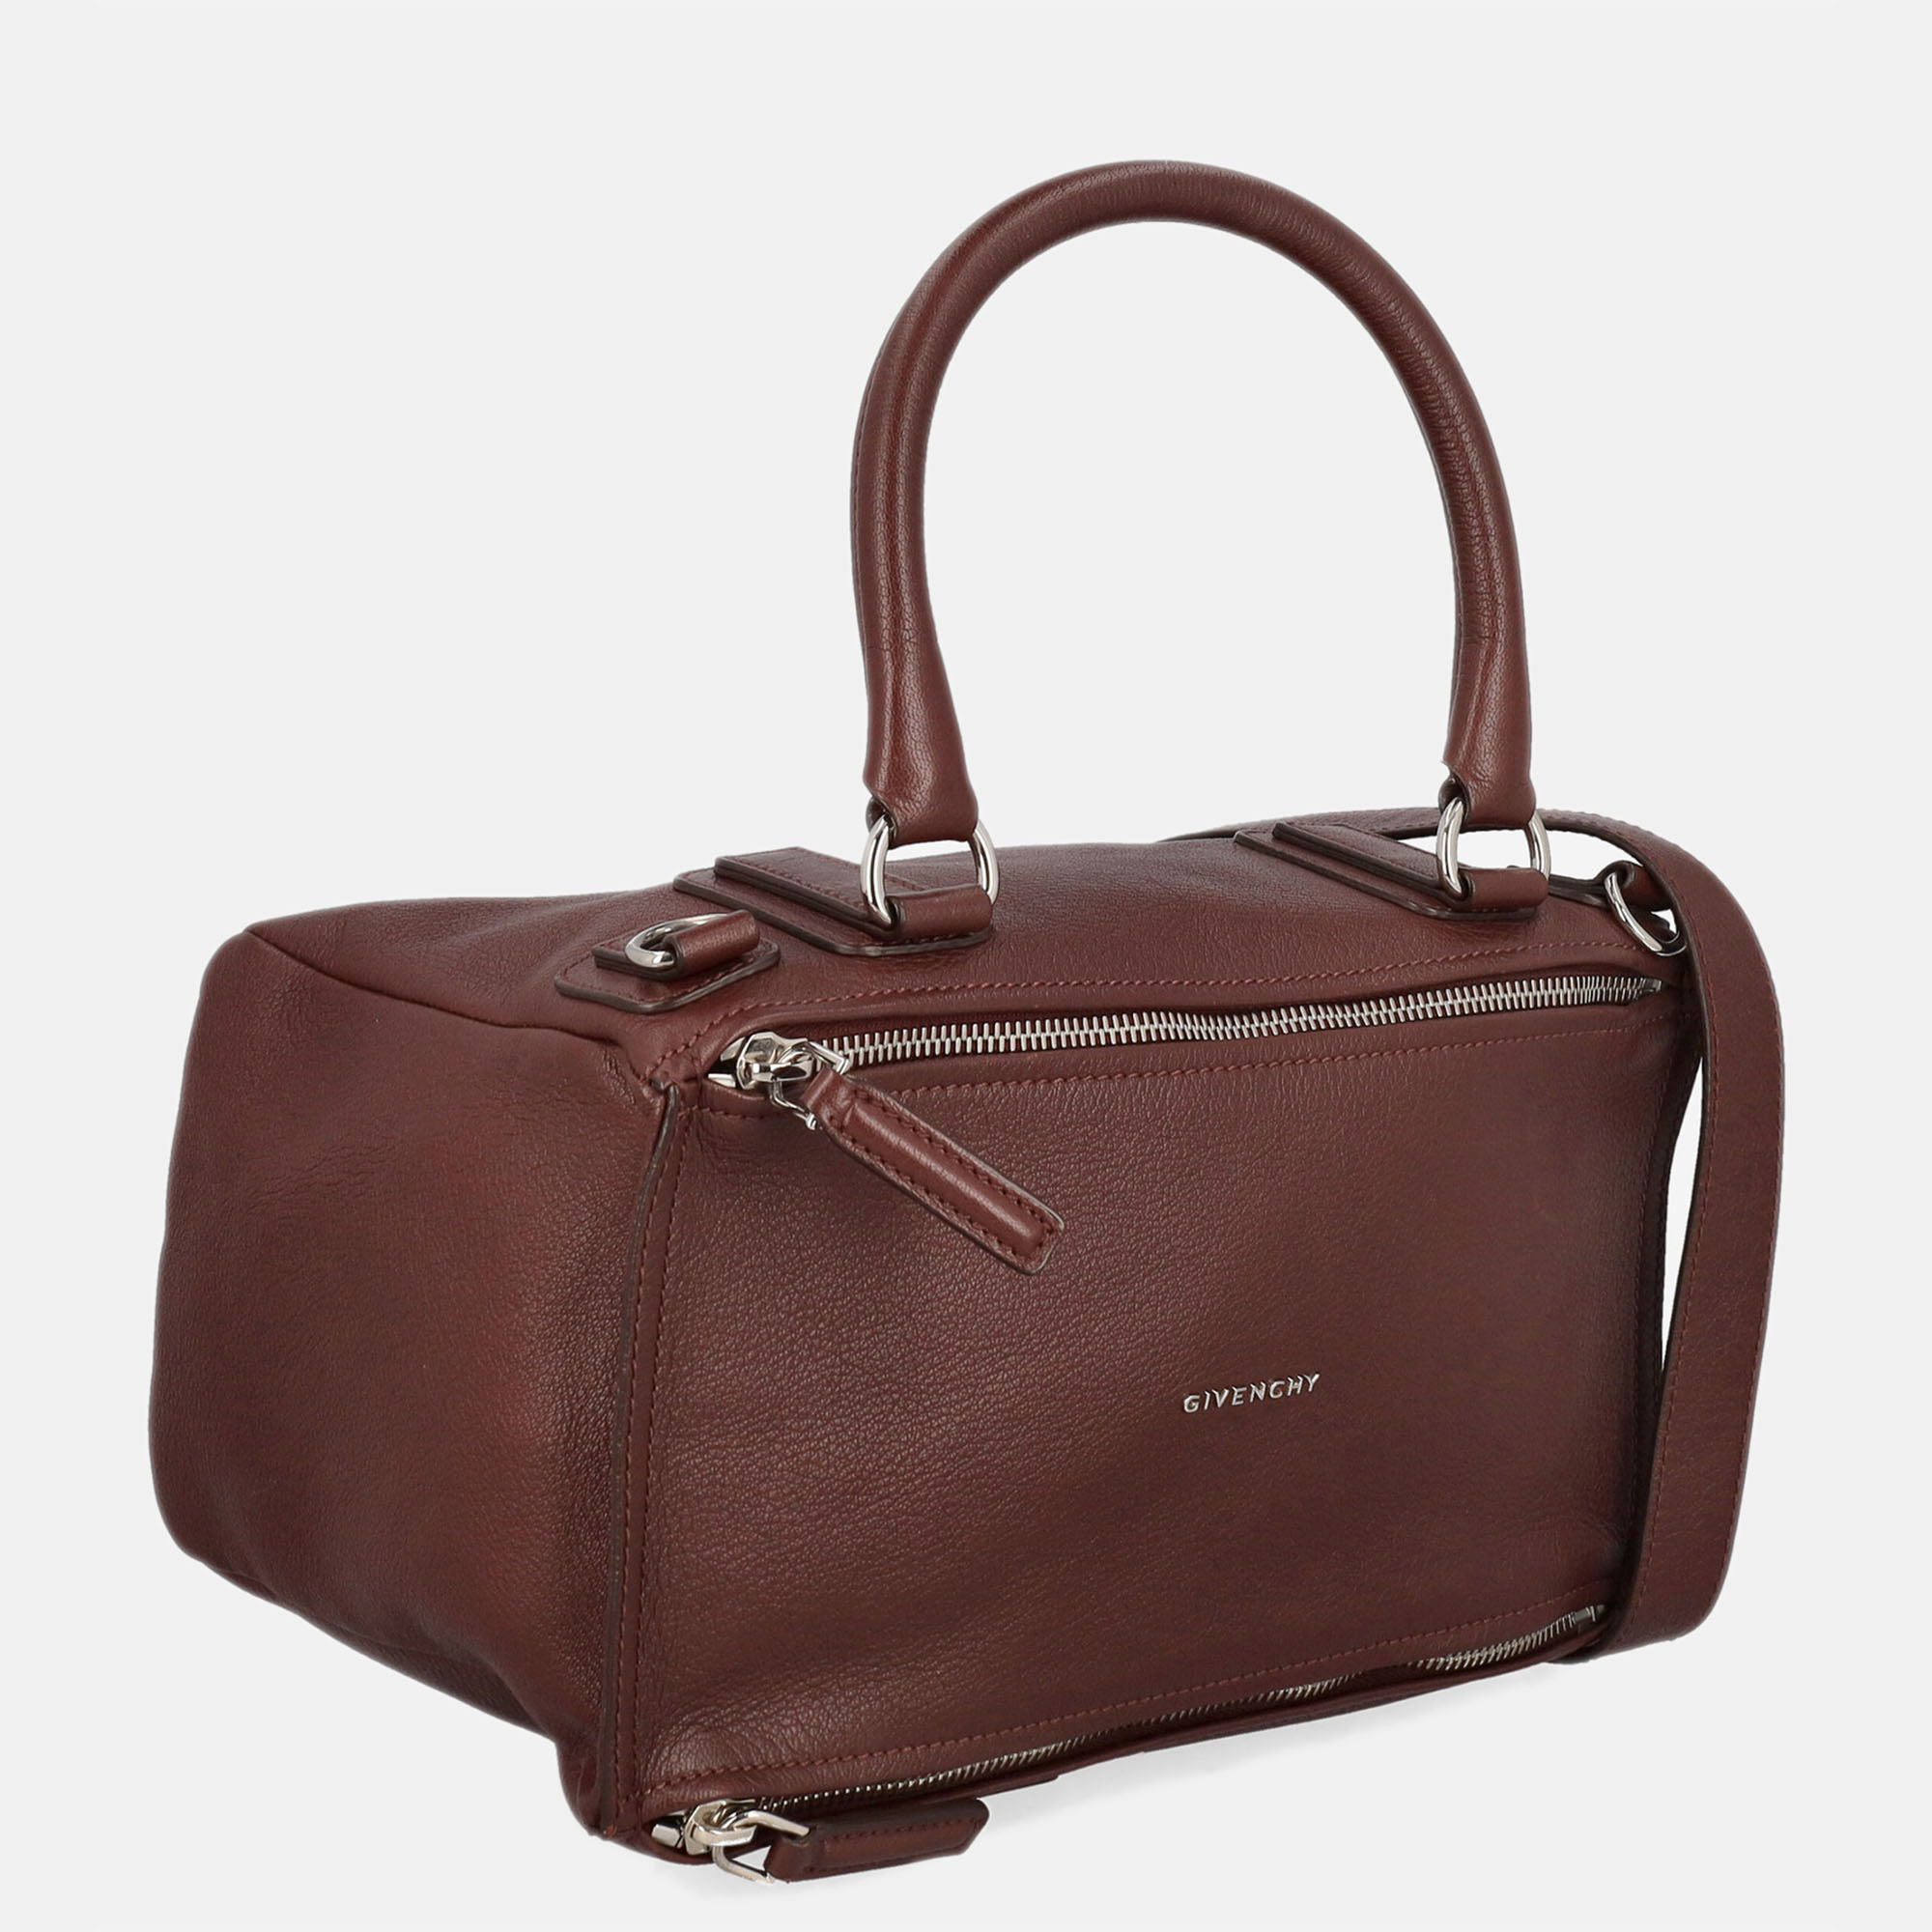 Givenchy Pandora -  Women's Leather Cross Body Bag - Burgundy - One Size